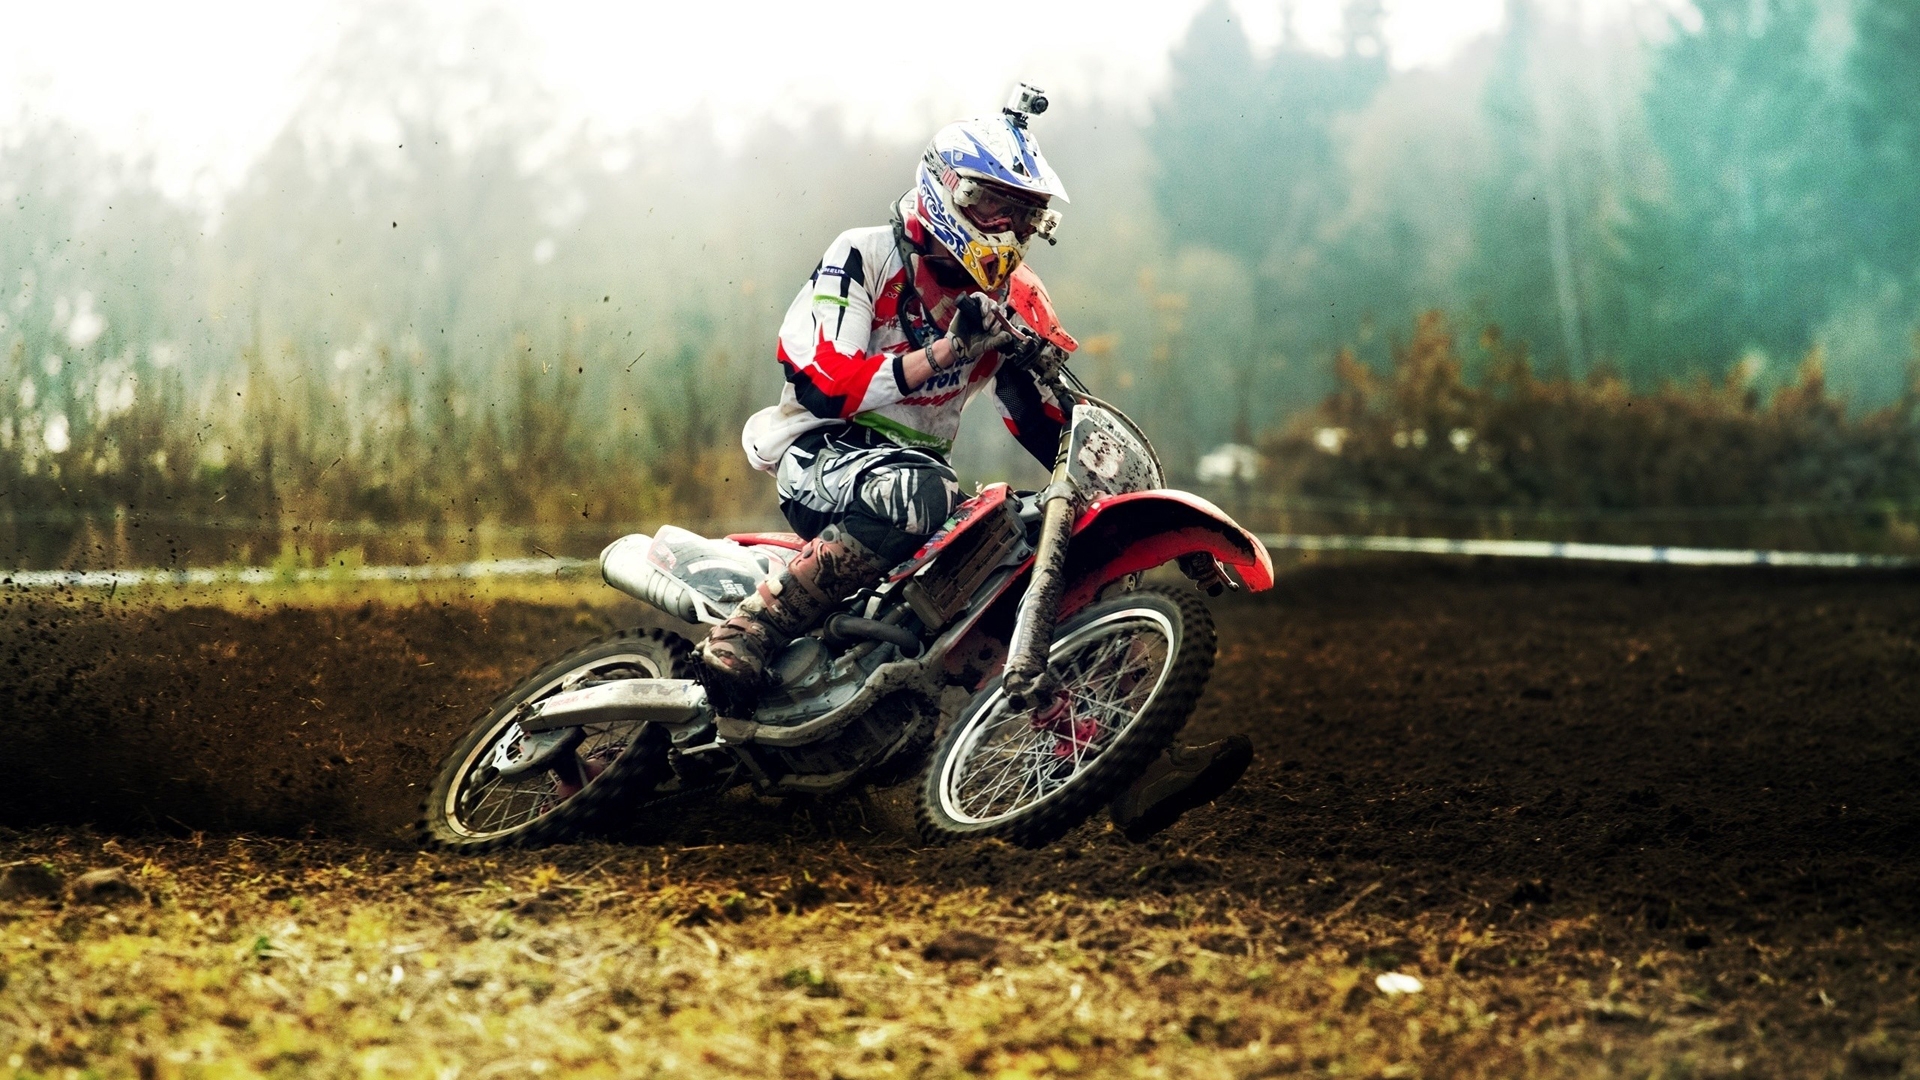 Pics Photos Motocross Wallpaper Pictures